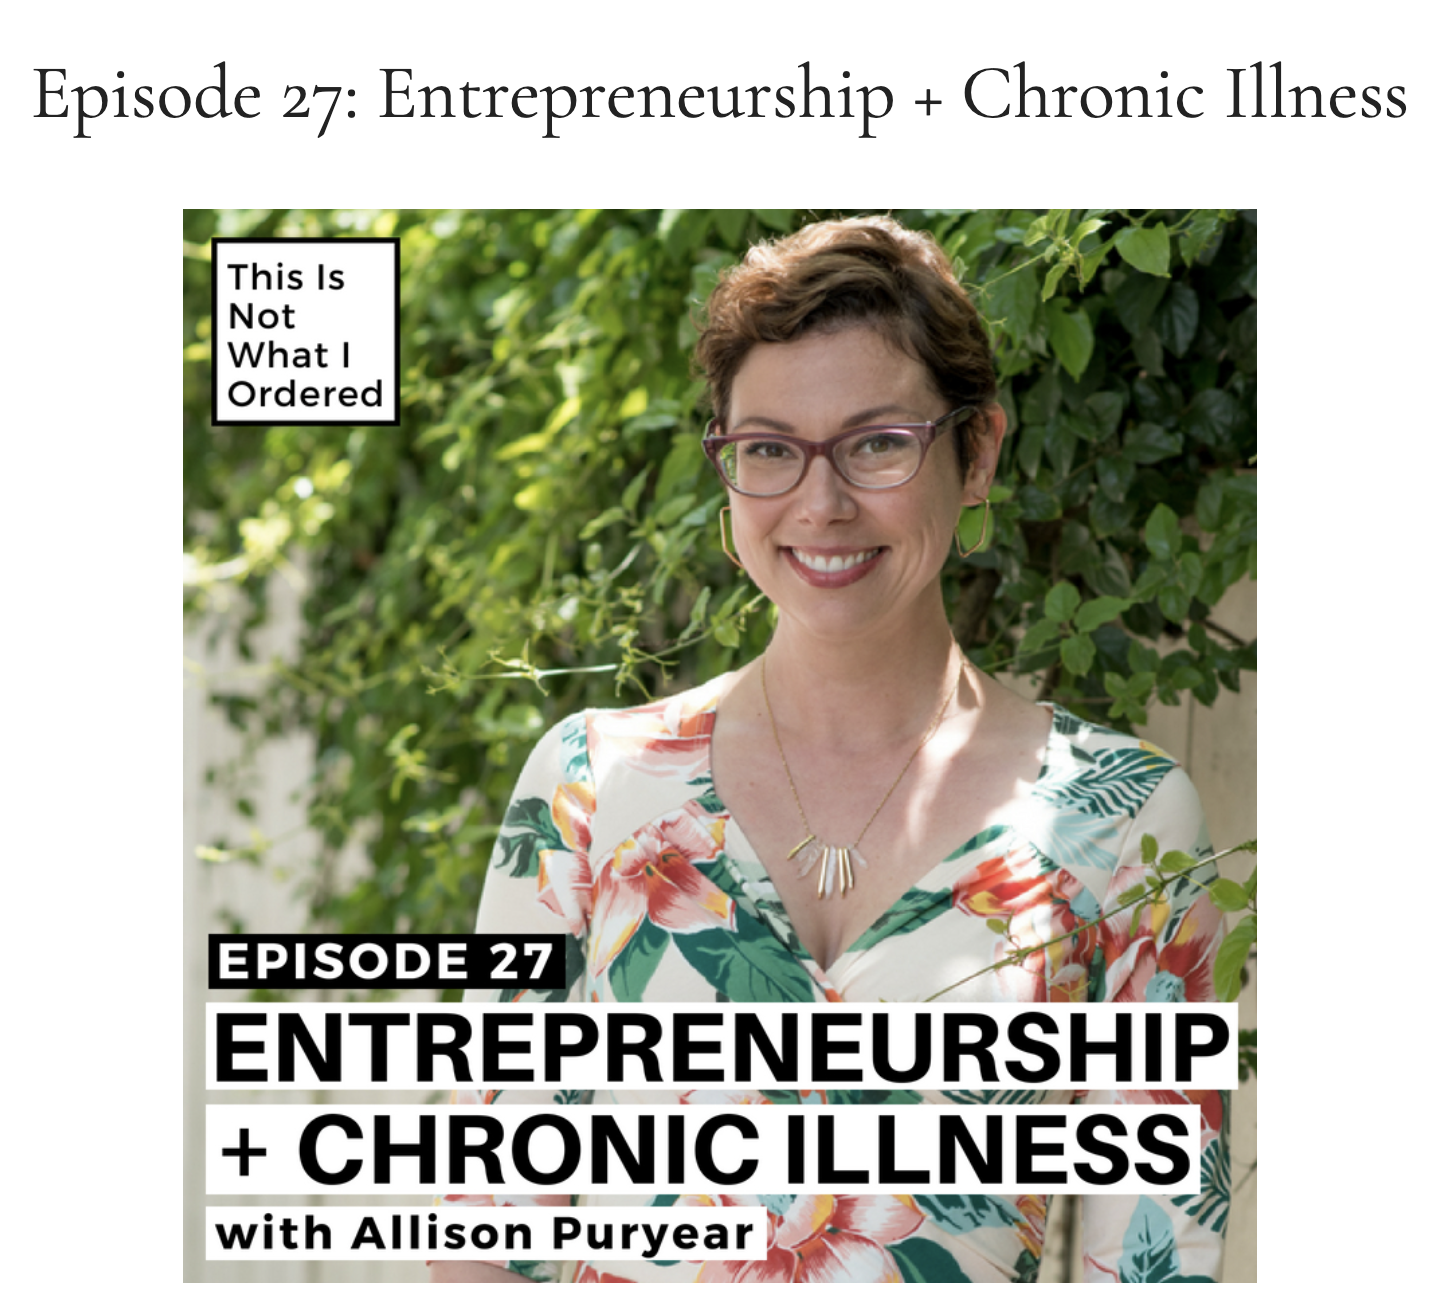 Entrepreneurship + Chronic Illness with Allison Puryear